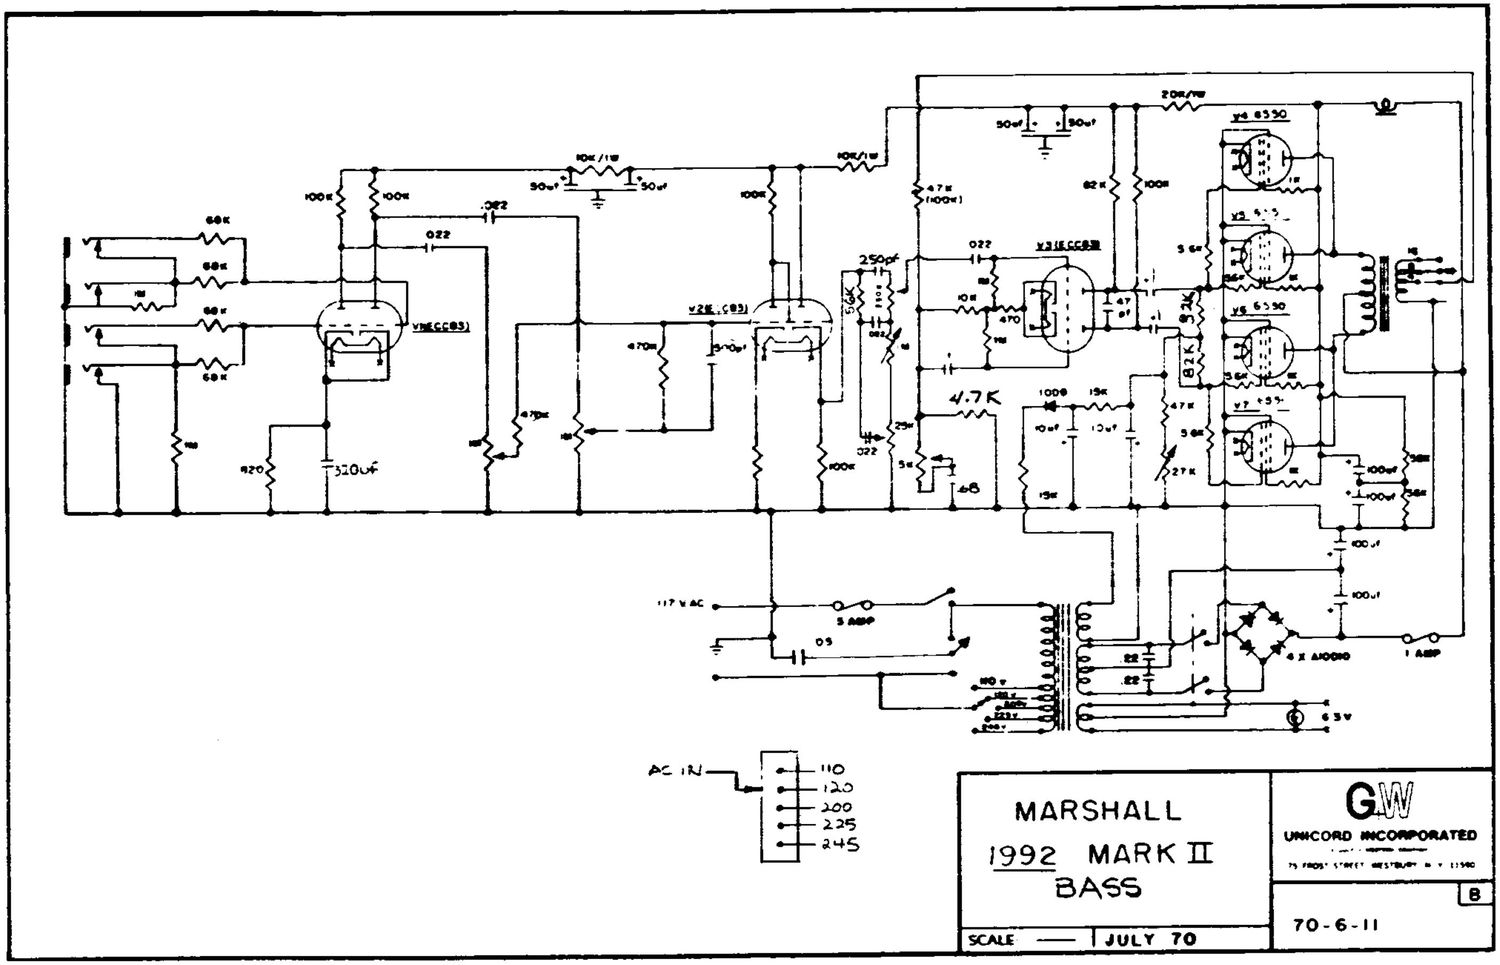 Marshall 1992 Mk2 Bass Schematic